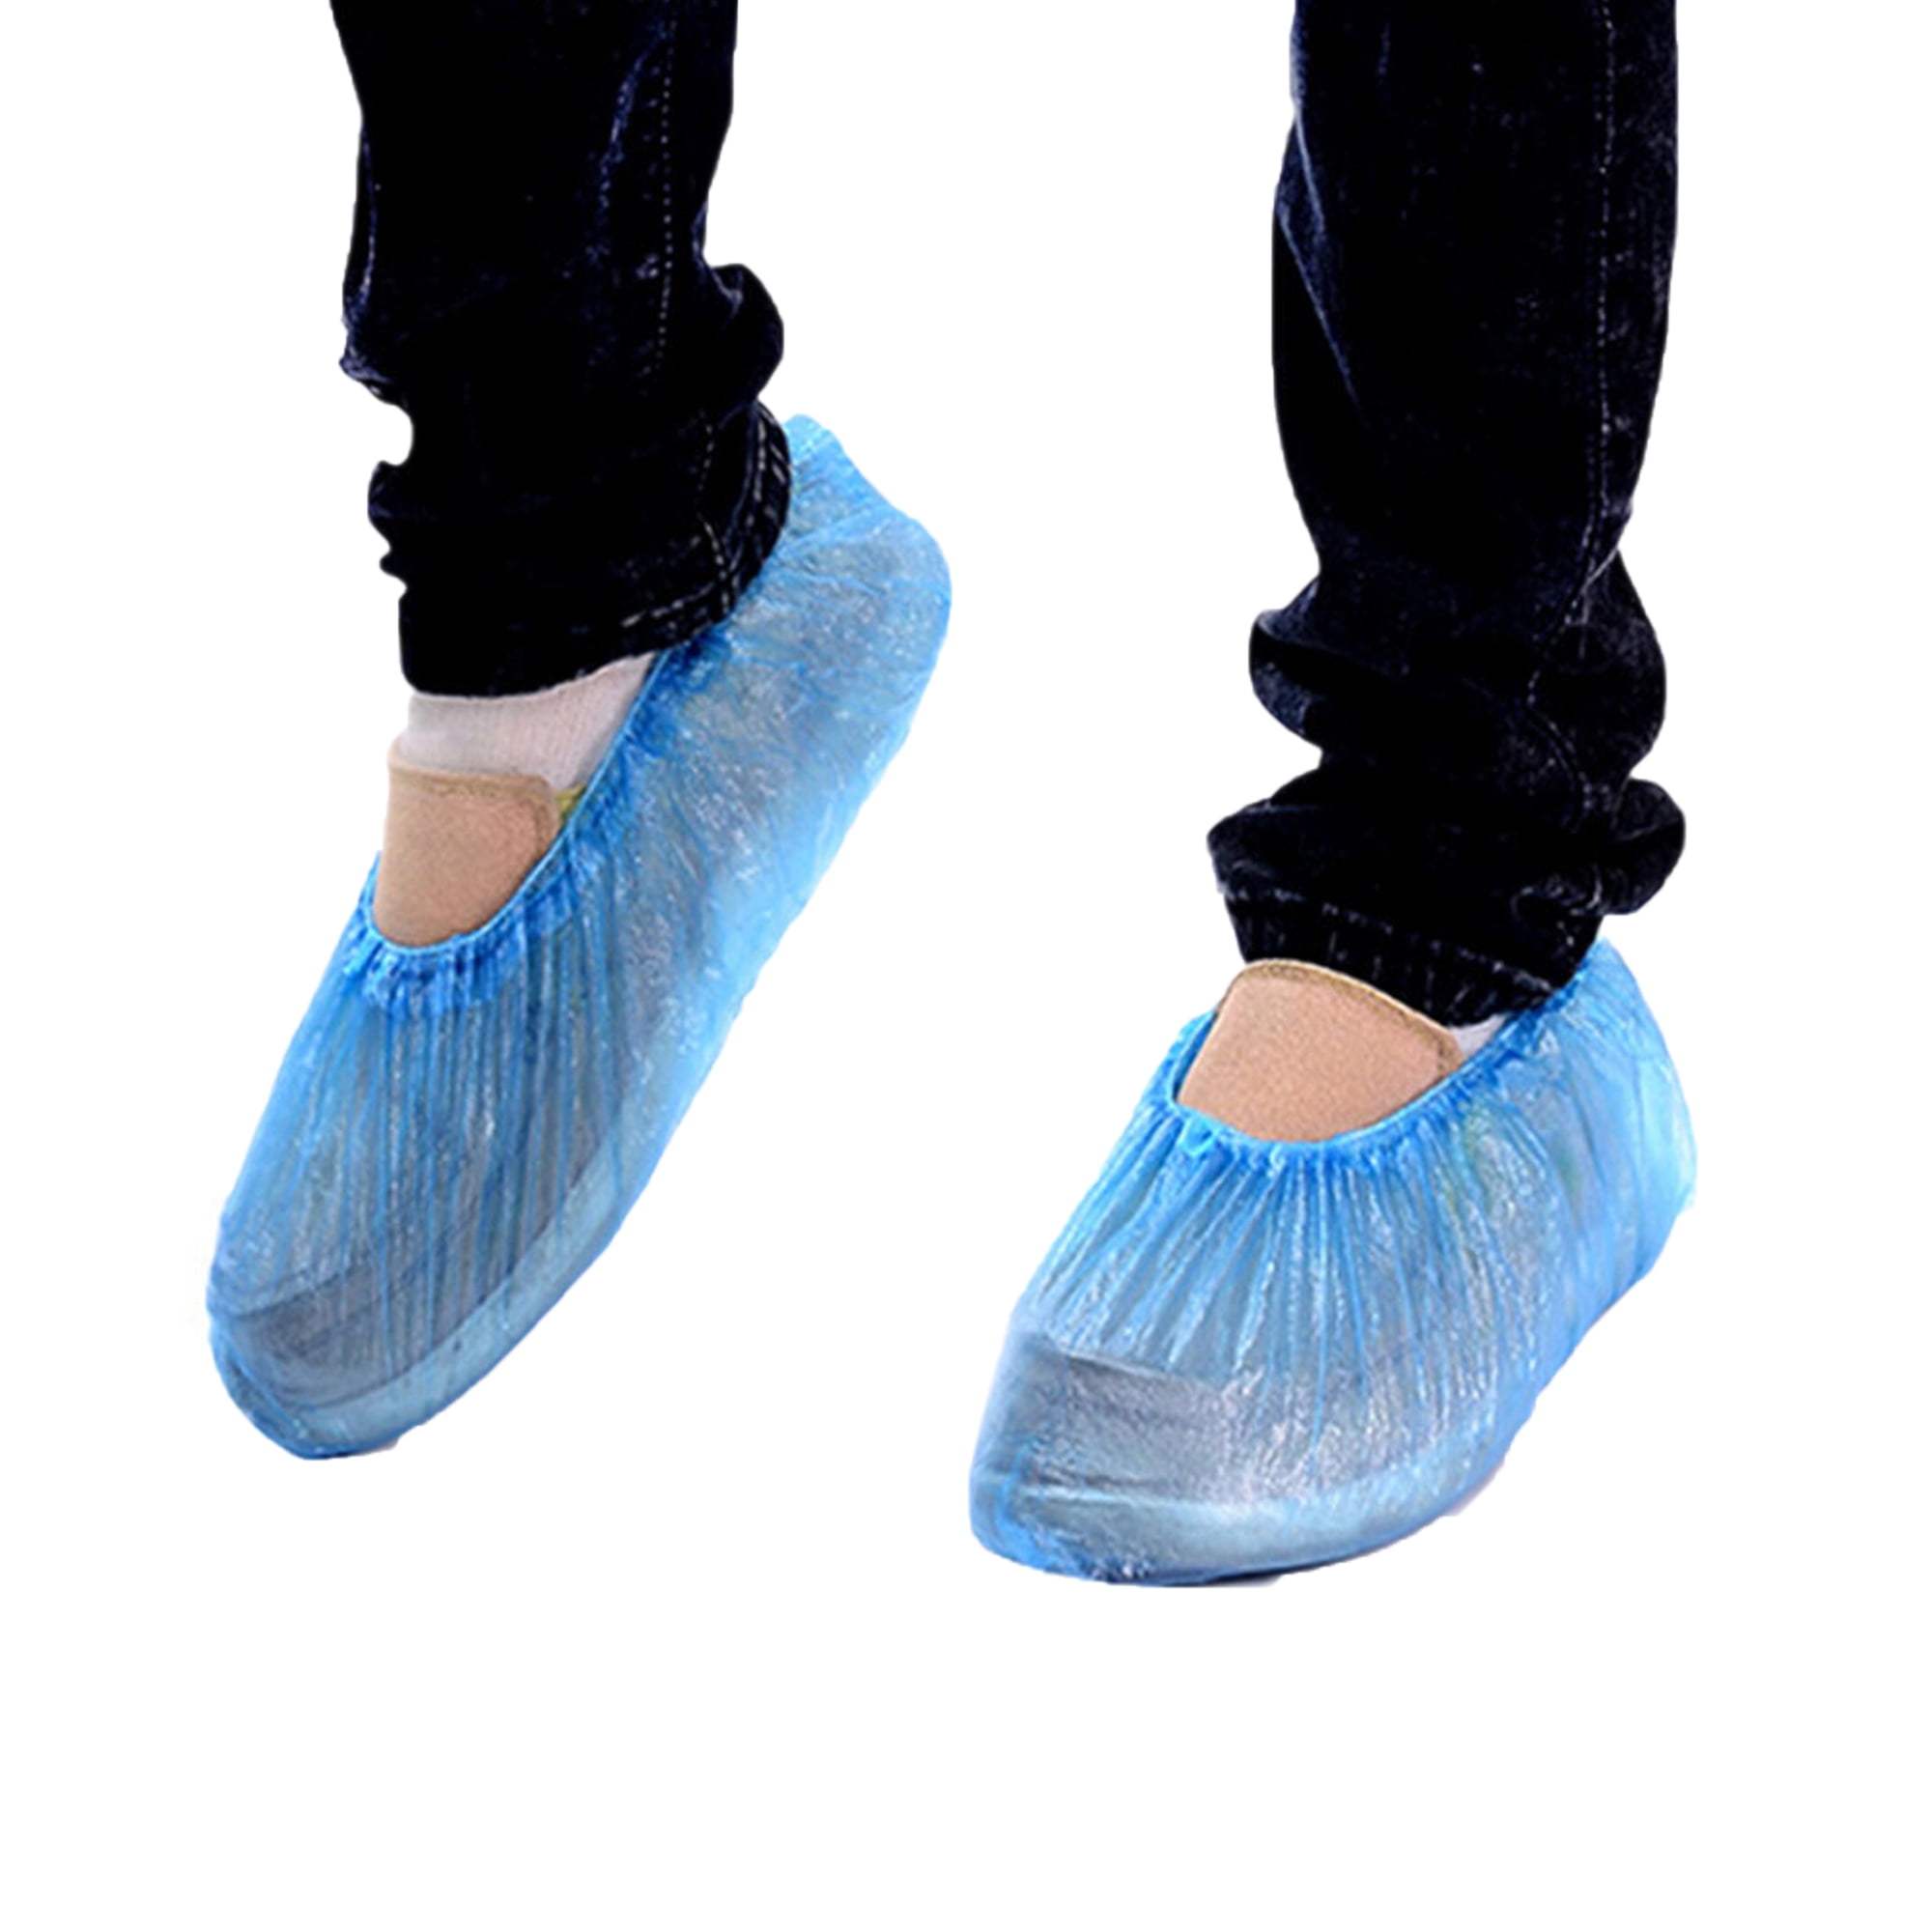 100Pcs/Set Disposable Plastic Shoe Covers Rooms Outdoors Waterproof Rain Boot Carpet Clean Hospital Overshoes Shoe Care Kits Blue 